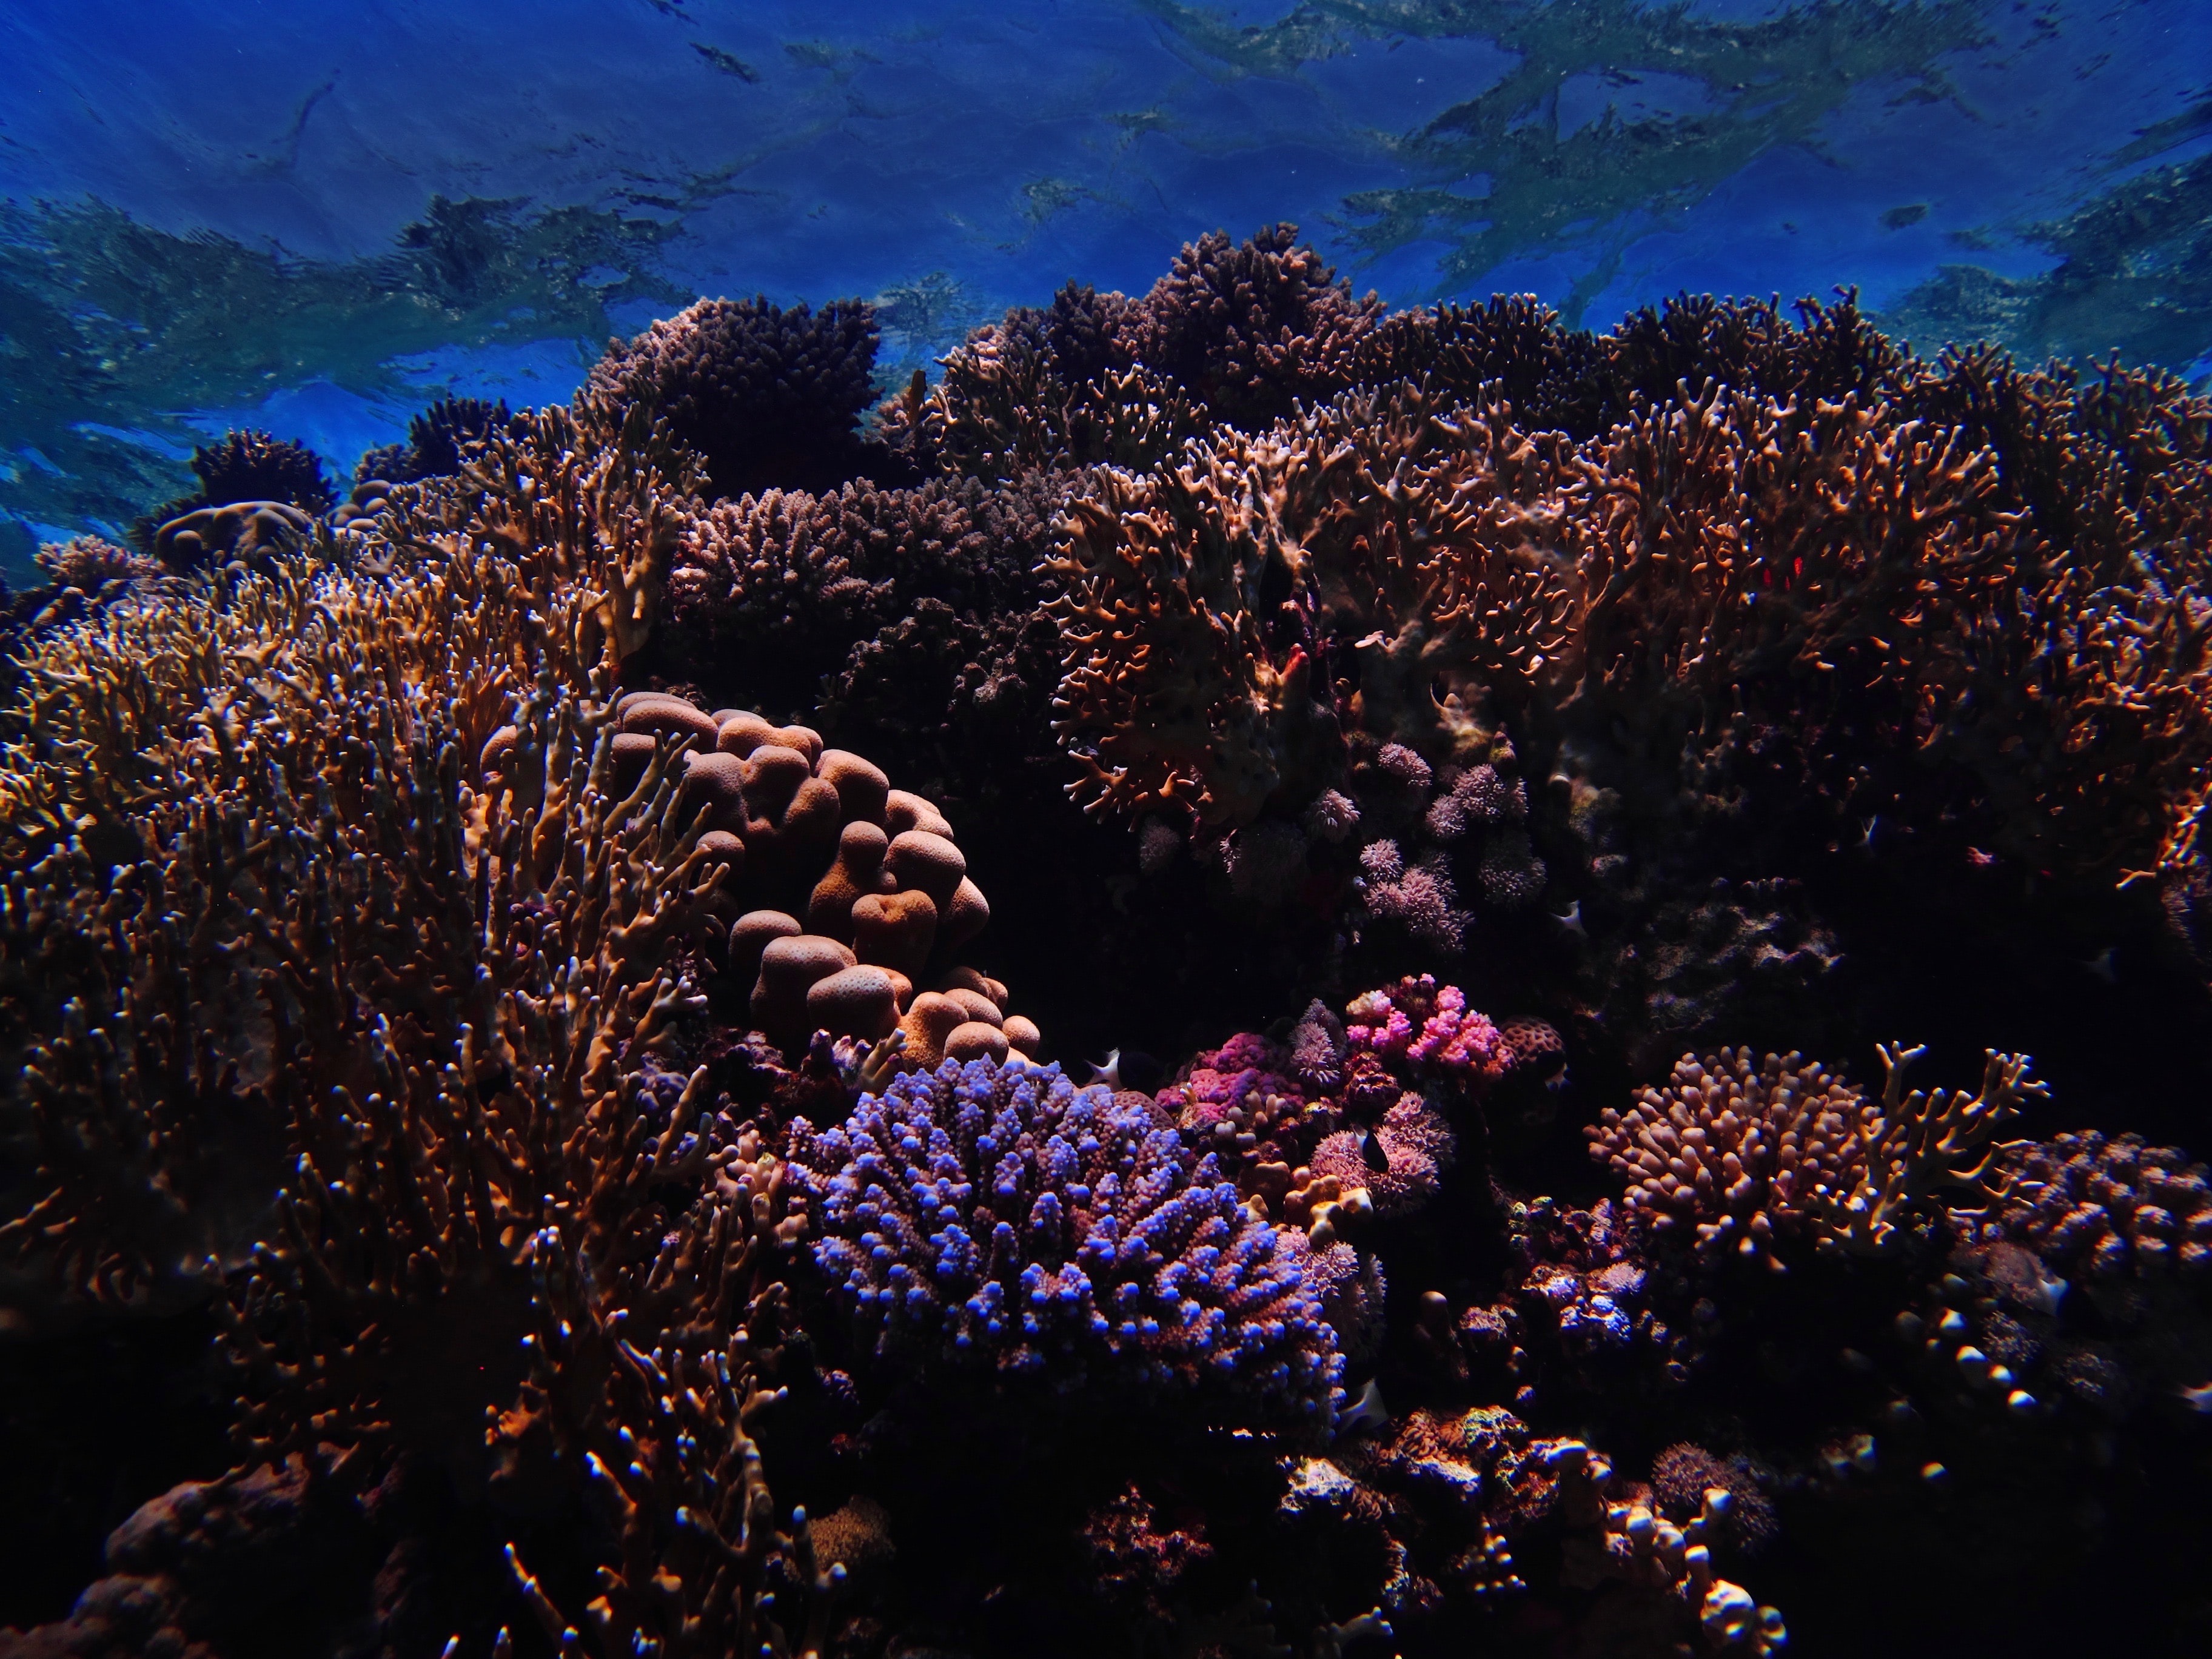 93017 descargar imagen naturaleza, coral, mundo submarino, náutico, marítimo, arrecife: fondos de pantalla y protectores de pantalla gratis